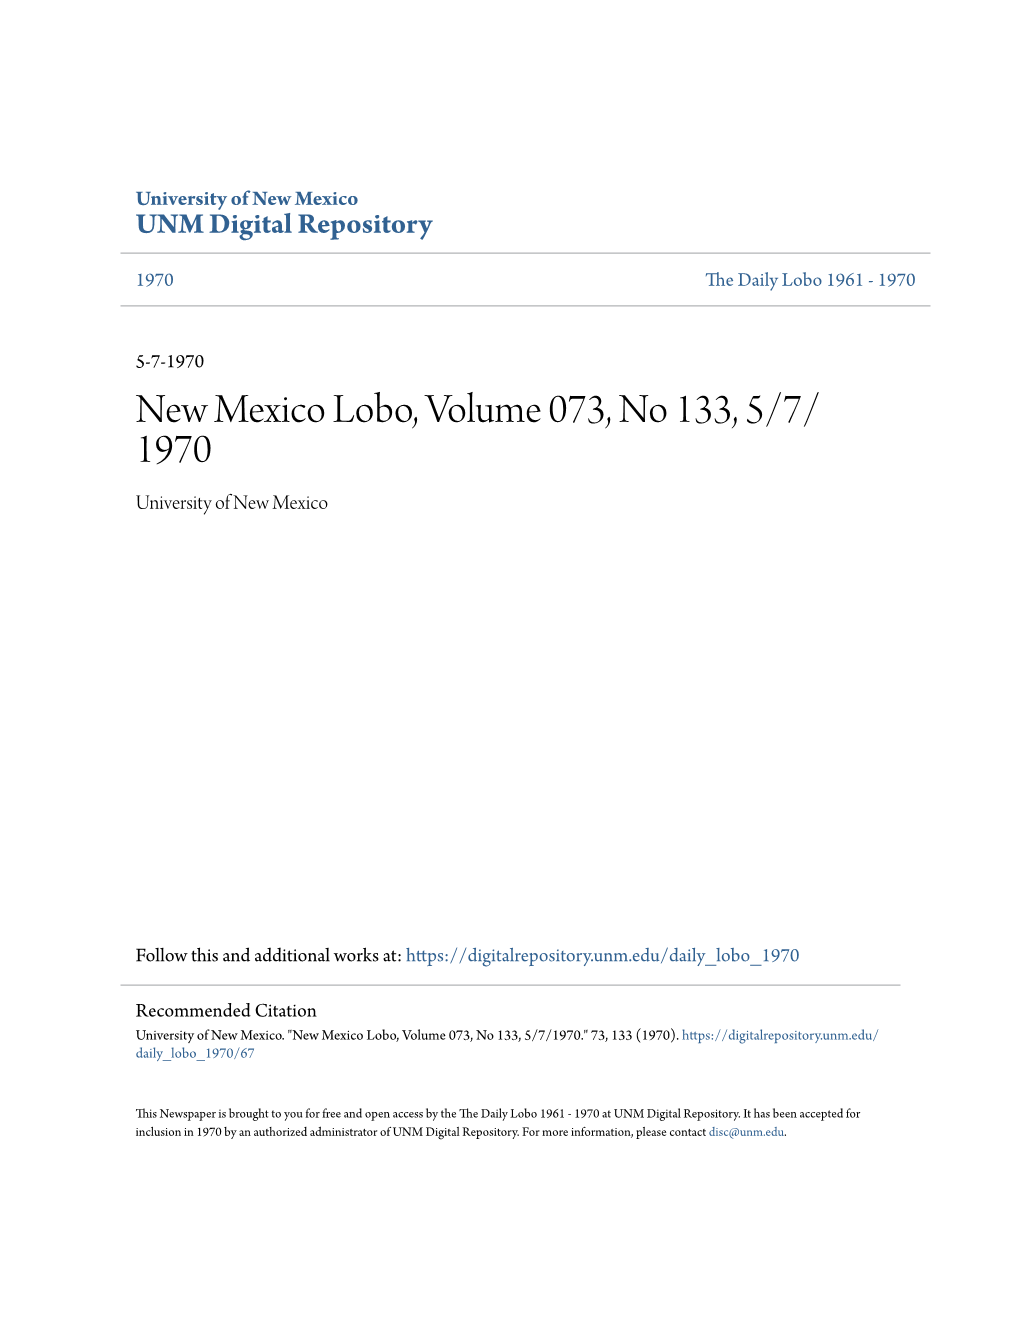 New Mexico Lobo, Volume 073, No 133, 5/7/1970." 73, 133 (1970)